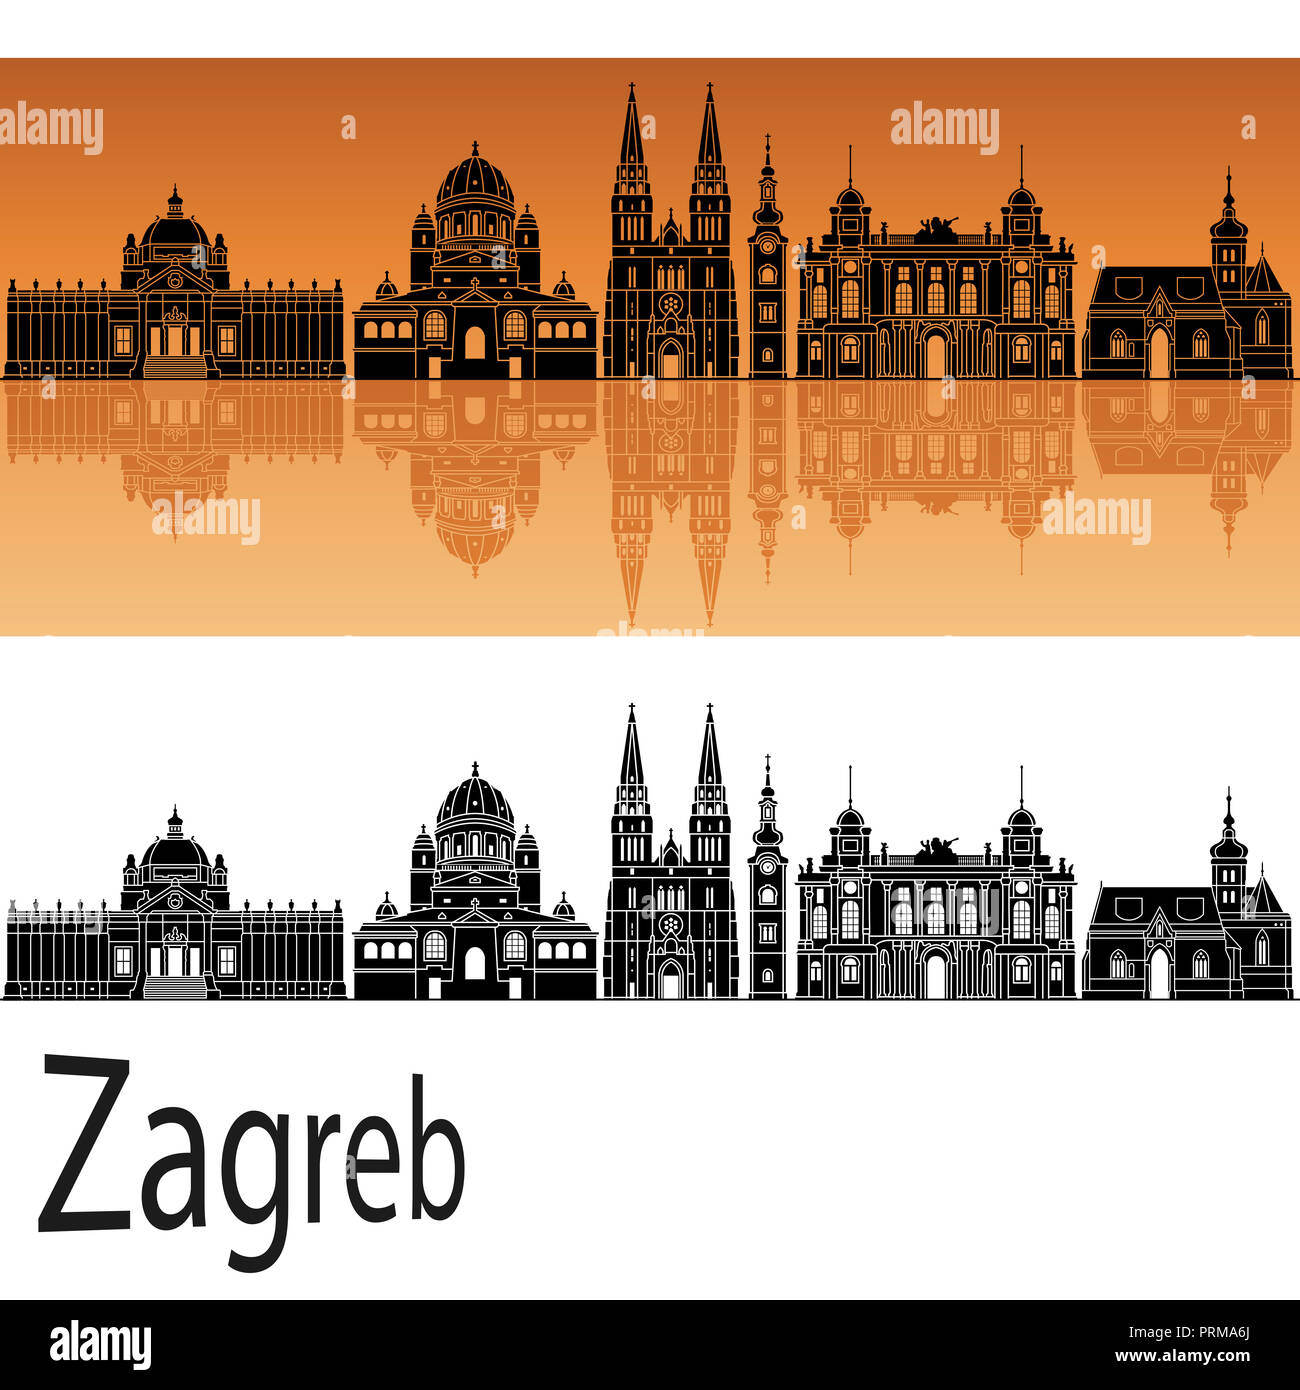 Zagreb skyline de fondo naranja en archivo vectorial editable Foto de stock